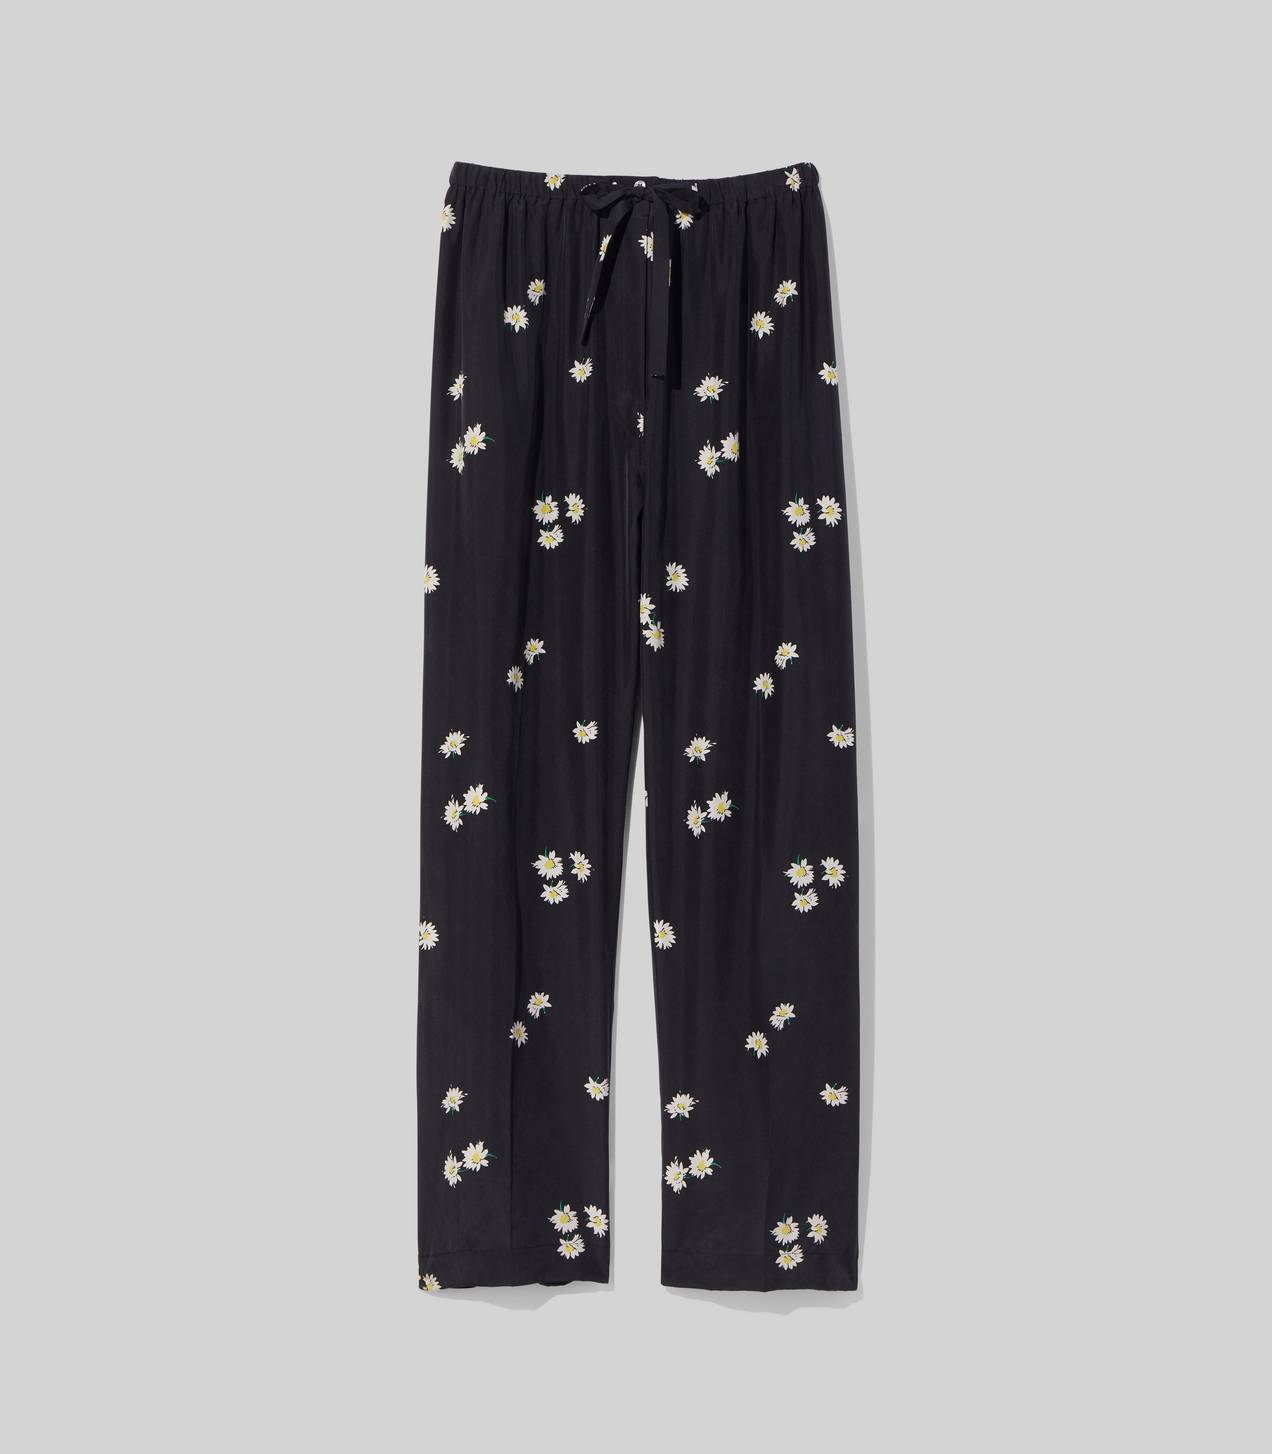 The Pajama Pants